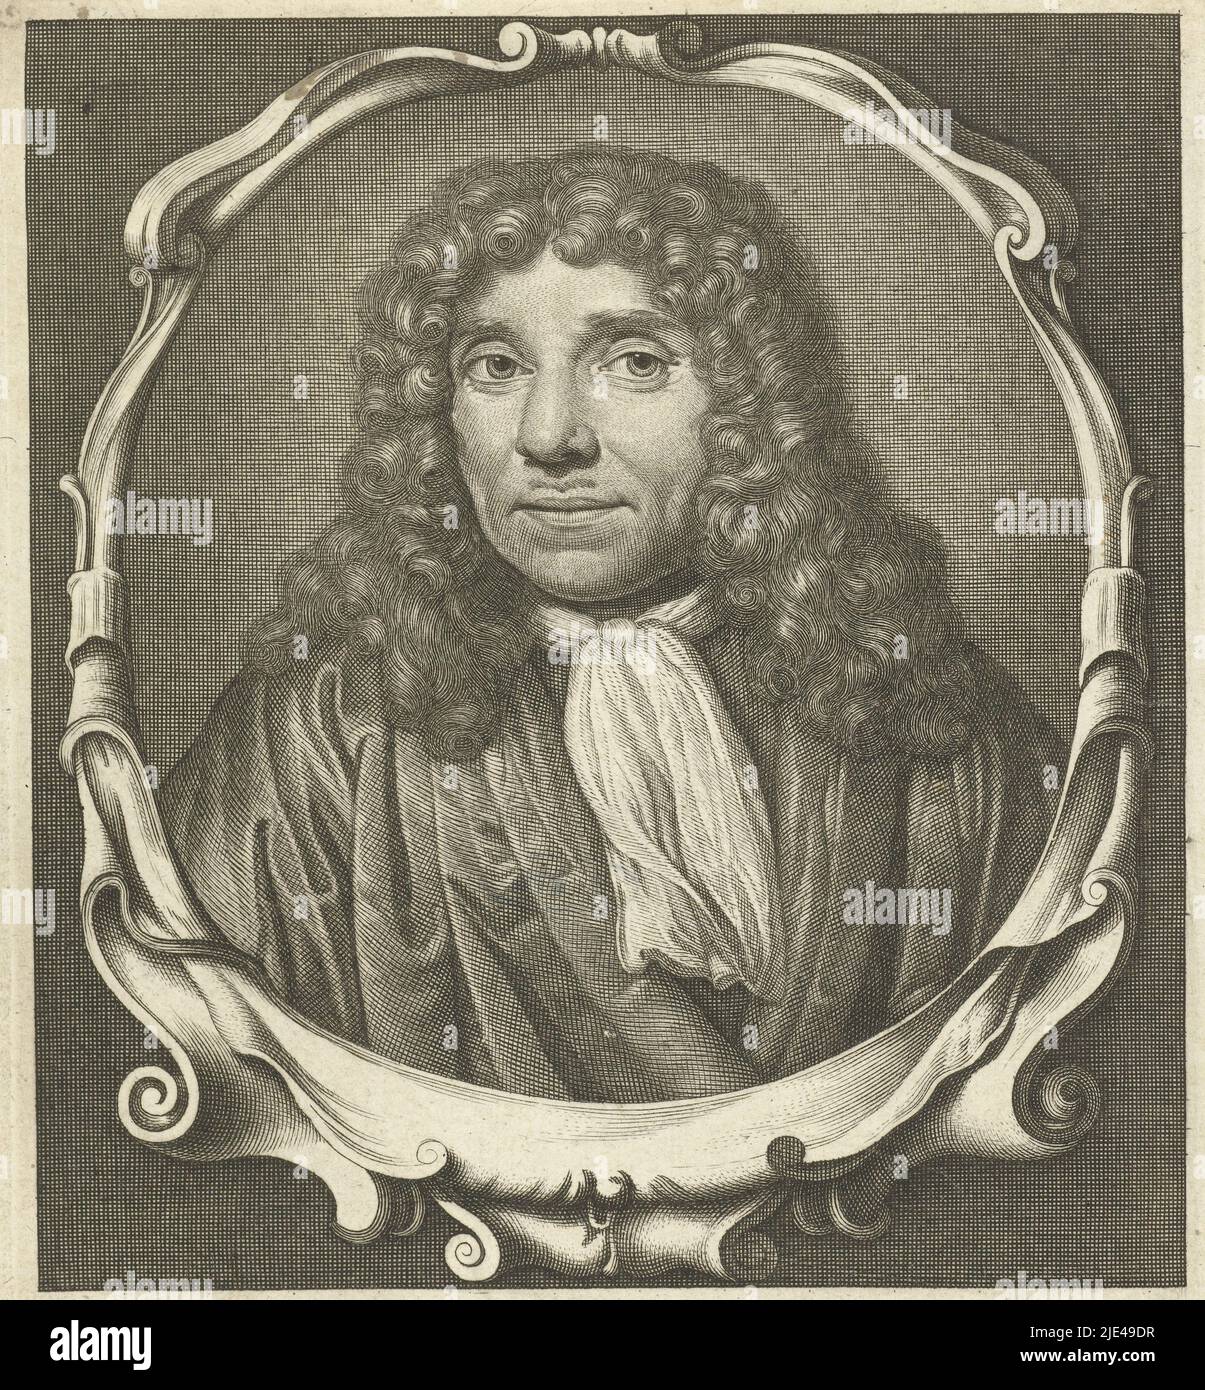 Portrait of Antonie van Leeuwenhoek, Abraham de Blois, after Jan Verkolje (I), c. 1679 - c. 1717, Portrait of Antonie van Leeuwenhoek, bust in oval frame with lobe ornament., print maker: Abraham de Blois, (mentioned on object), after: Jan Verkolje (I), (mentioned on object), Amsterdam, c. 1679 - c. 1717, paper, engraving, h 177 mm × w 143 mm Stock Photo